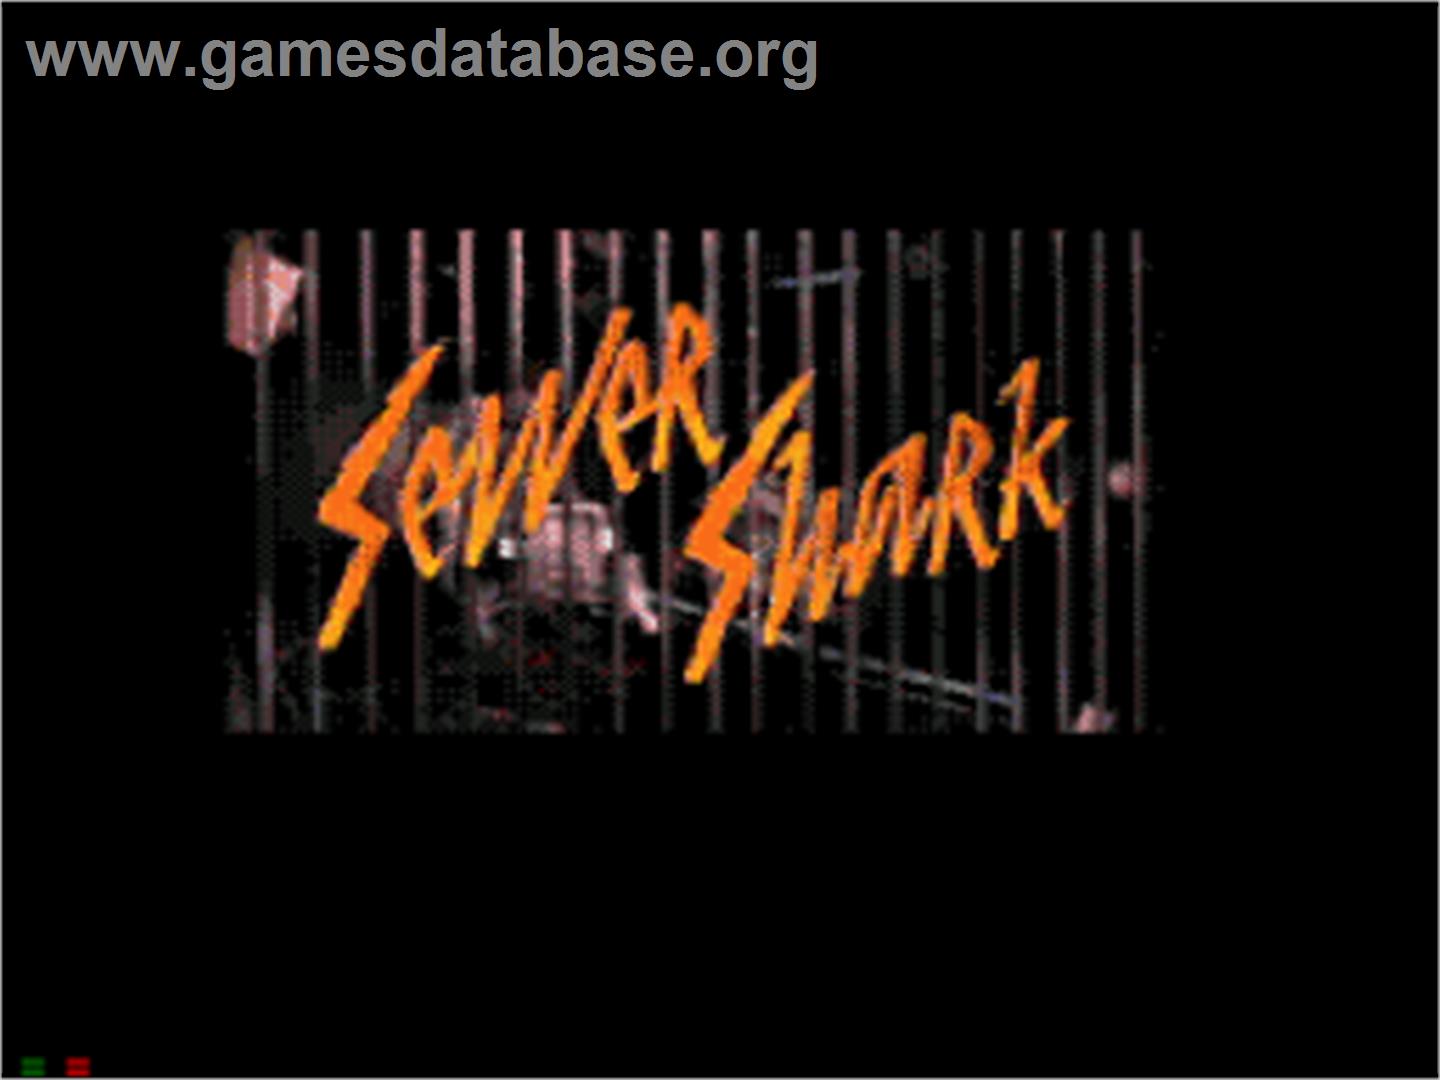 Sewer Shark - Sega CD - Artwork - Title Screen